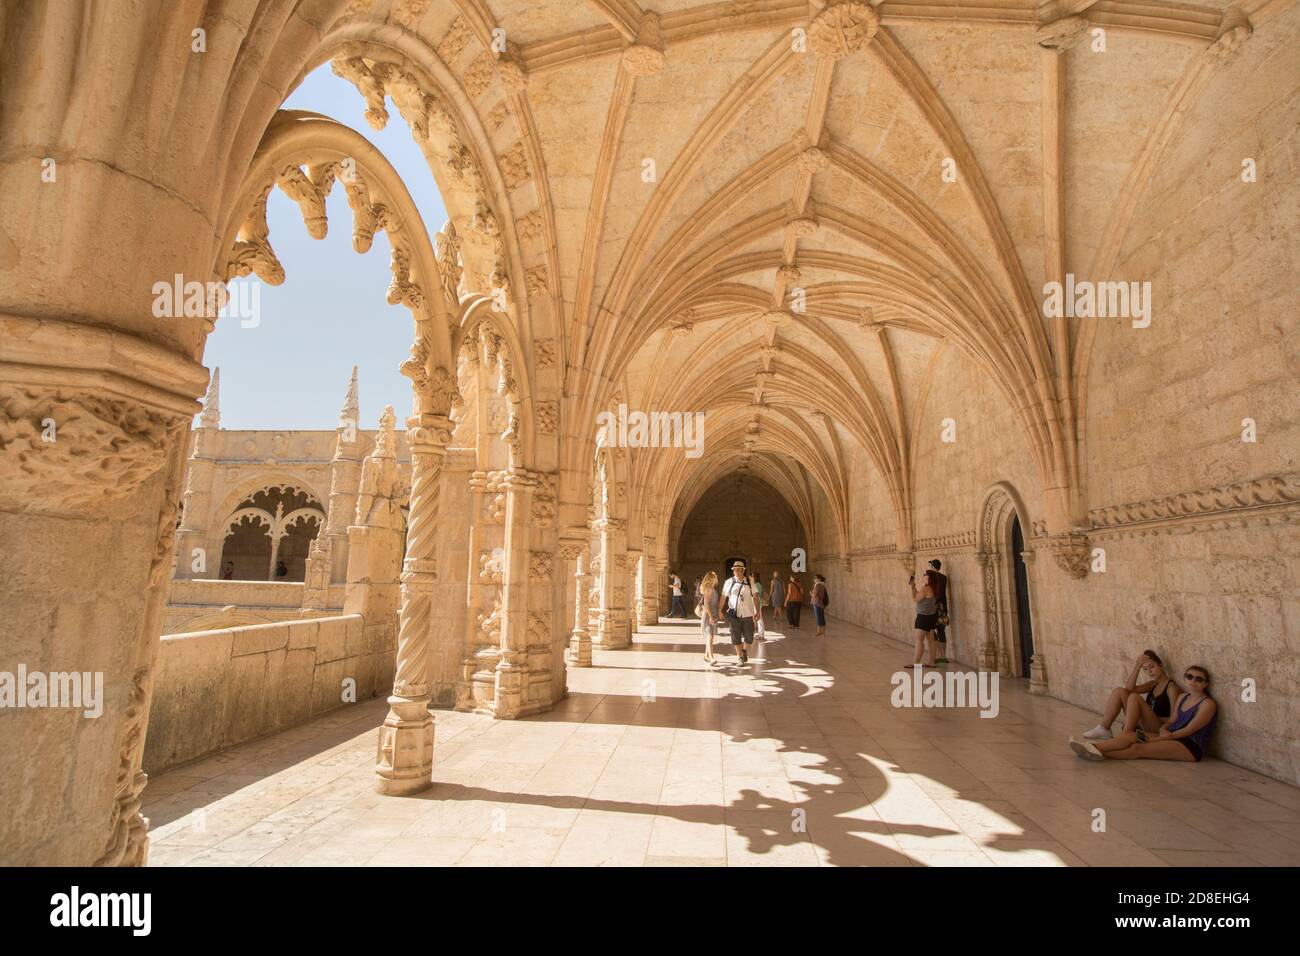 Innenkloster des Klosters Jerónimos in Lissabon, Portugal, Europa. Stockfoto